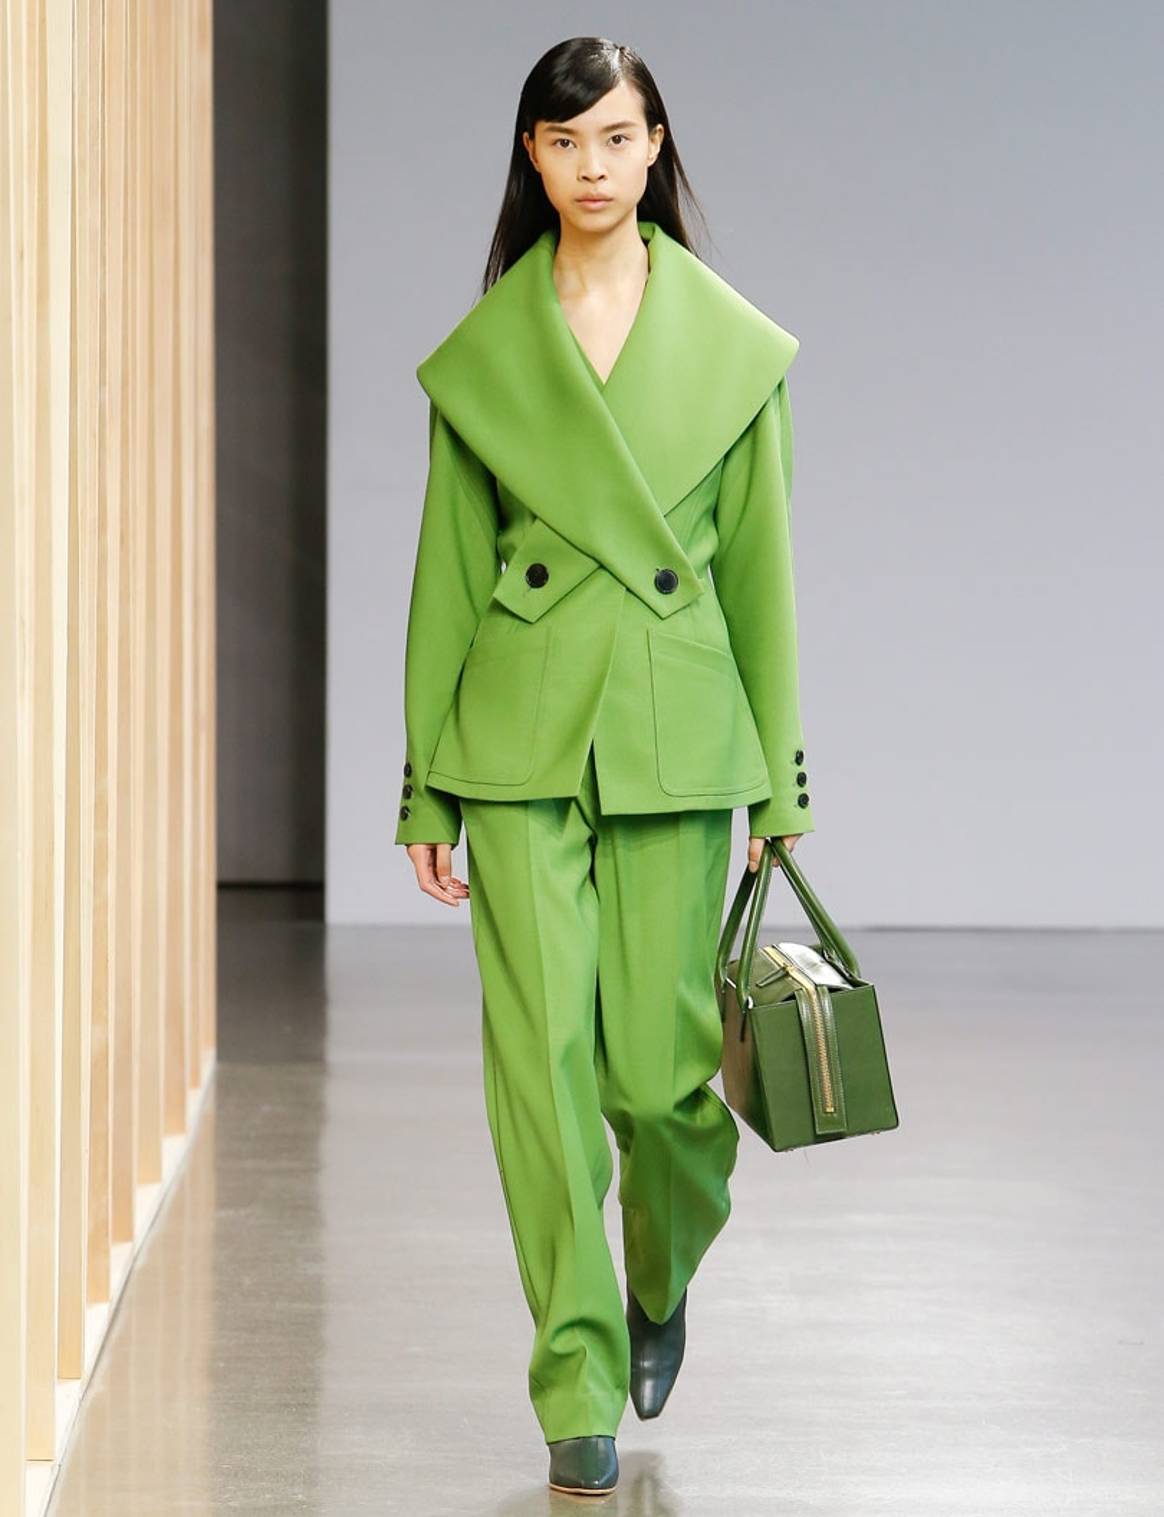 Claudia Li presented the modern princess at New York Fashion Week